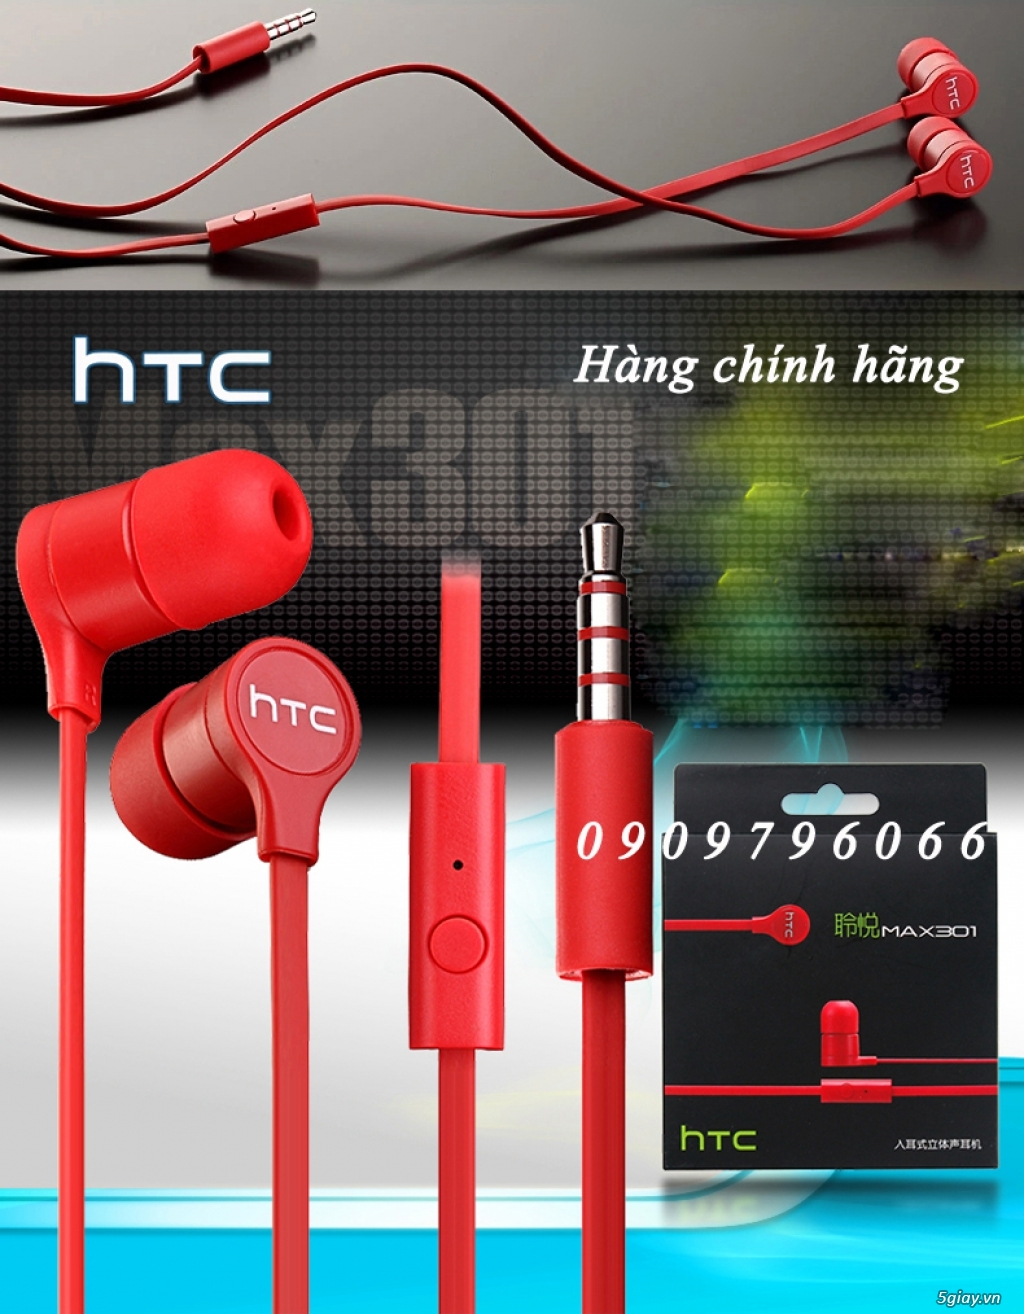 PKSTORE.VN >>> Sạc HTC - Tai nghe HTC One: Max300, Max 301, E240, J240, HTC 10... Beats audio zin<<< - 17